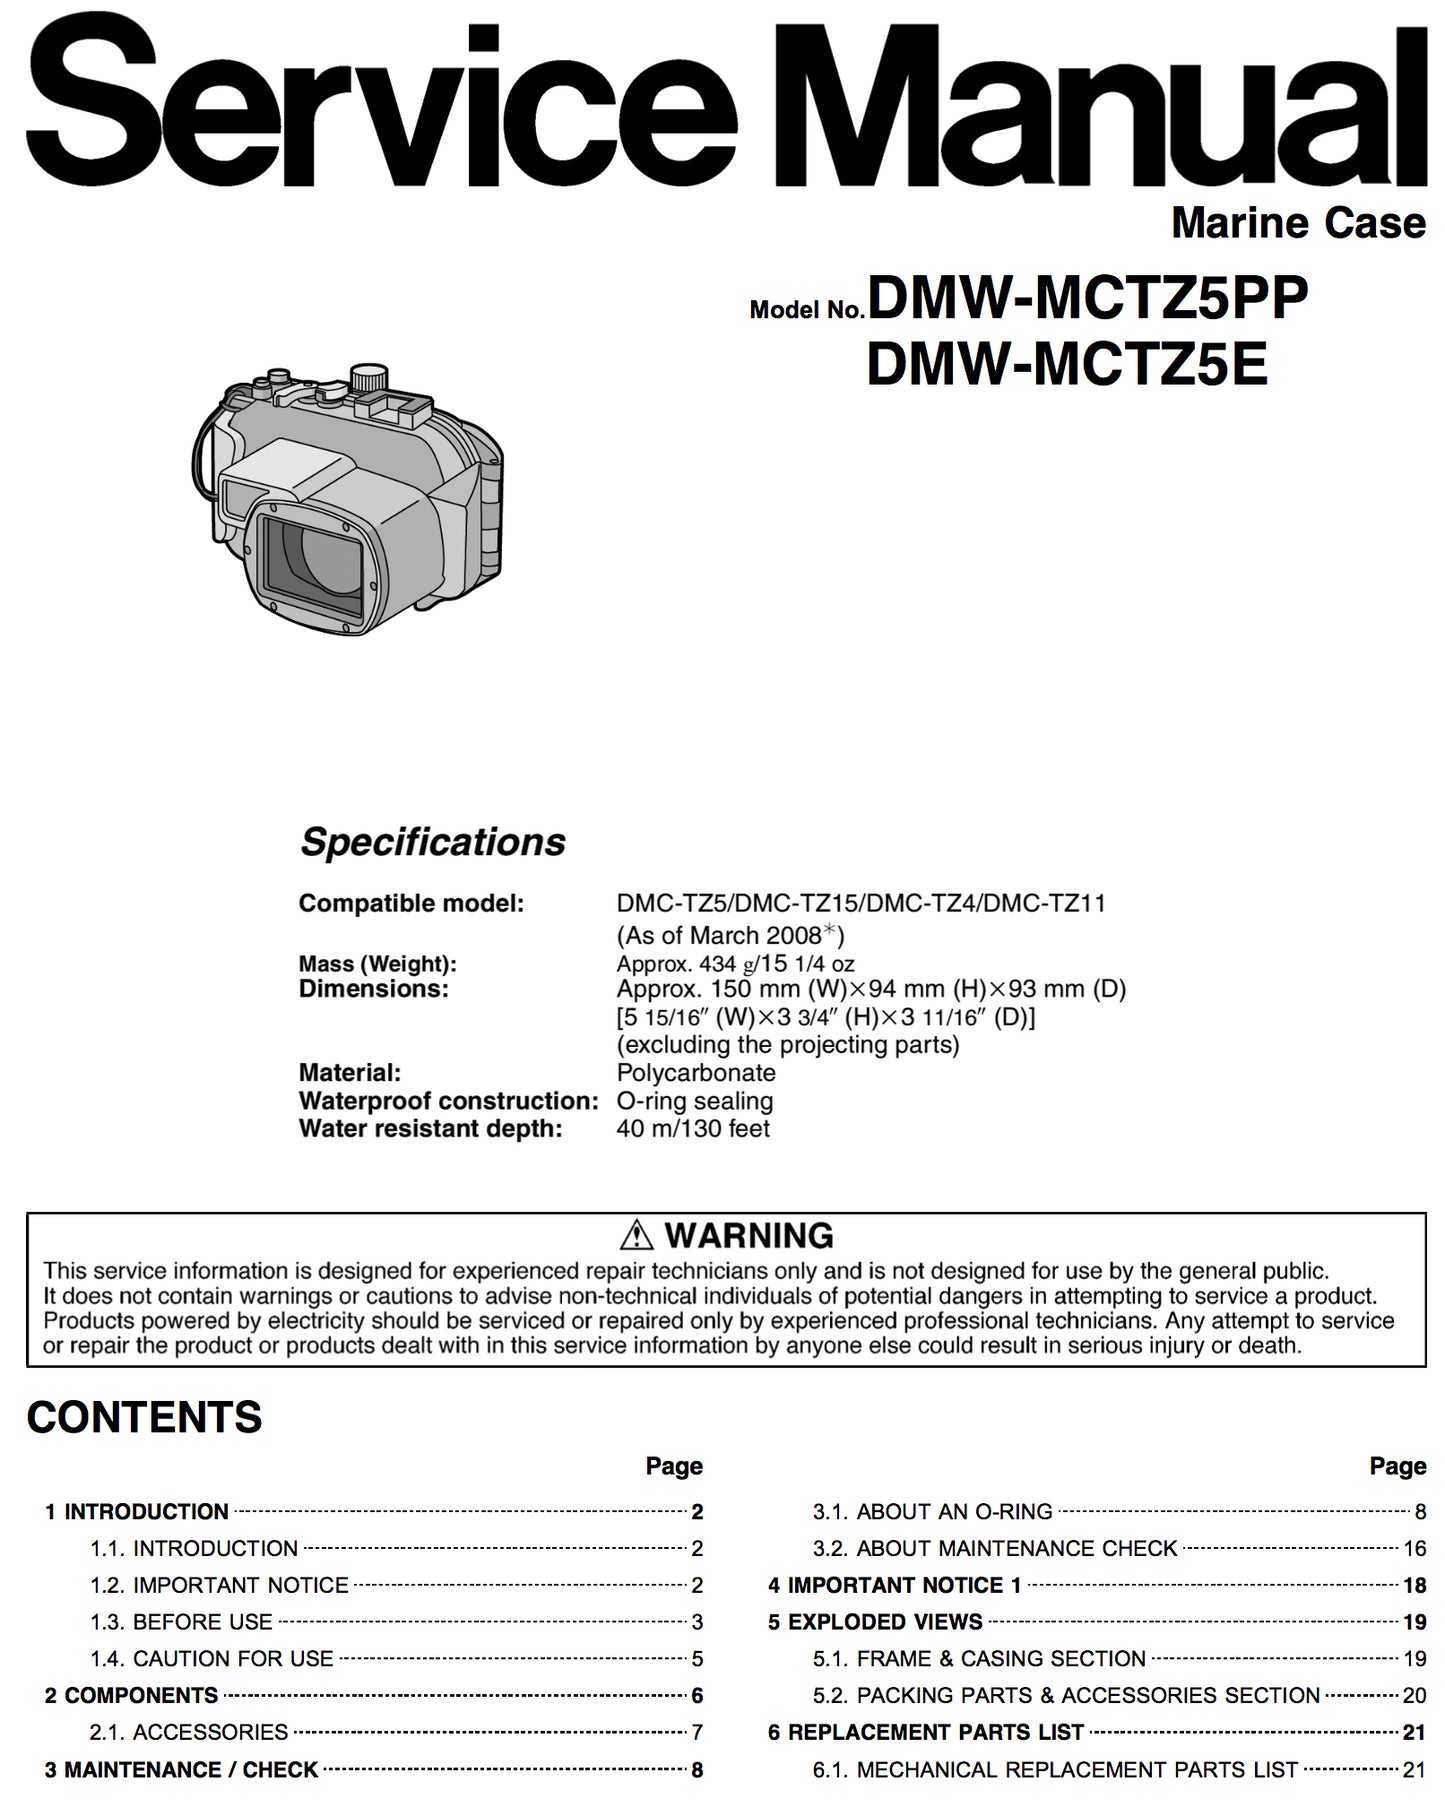 Panasonic DMW-MCTZ5E DMW-MCTZ5PP Service Manual Complete